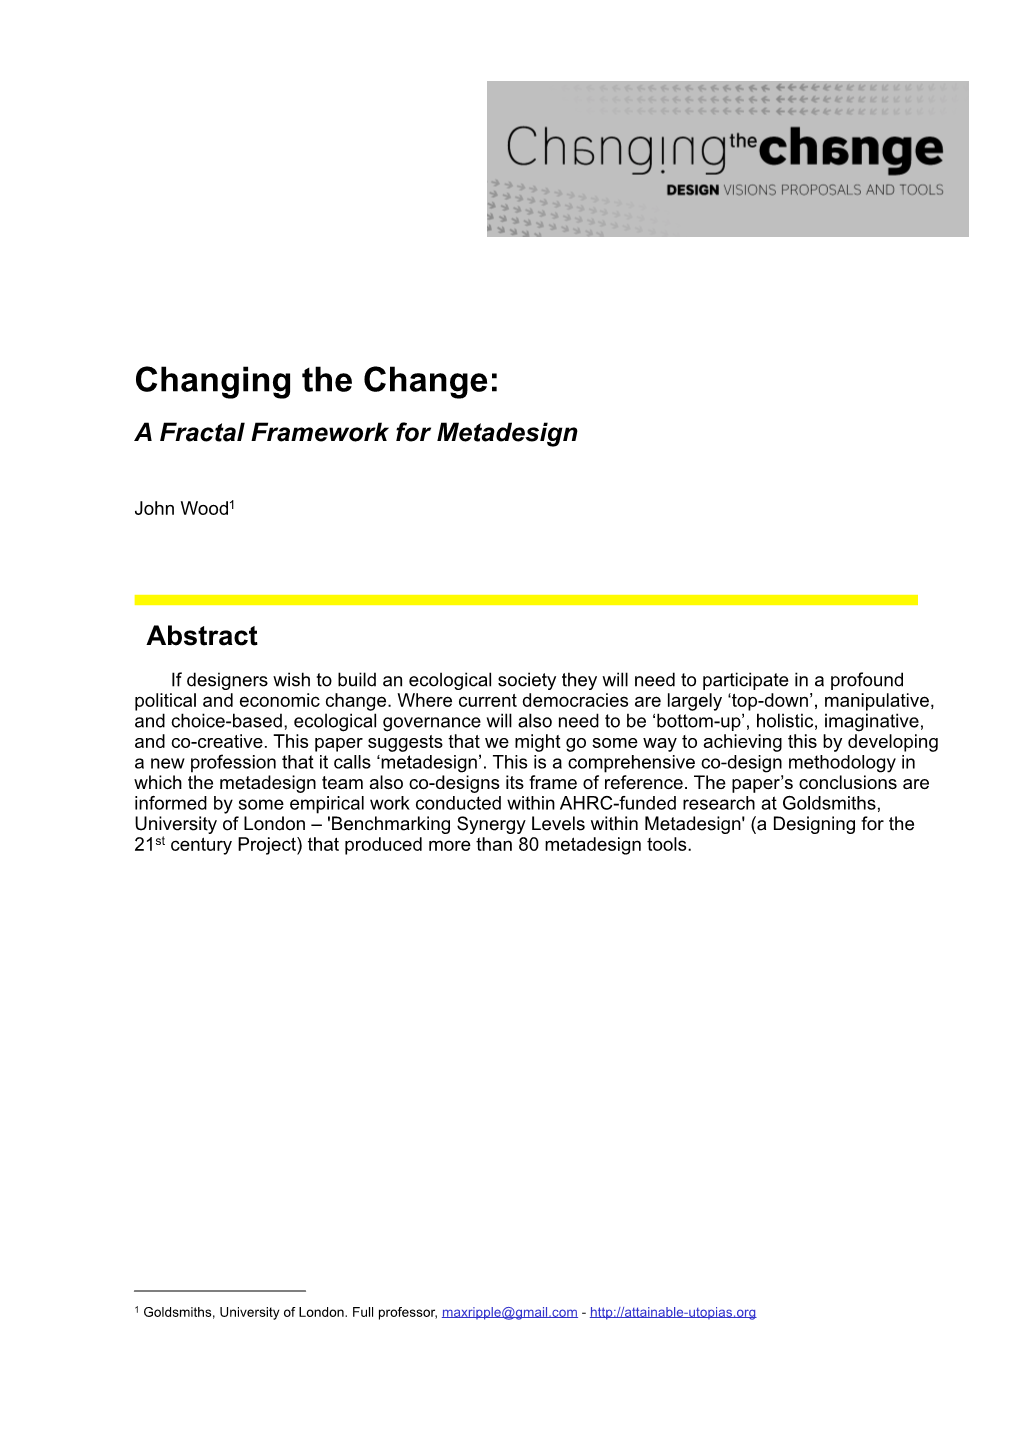 Changing the Change: a Fractal Framework for Metadesign